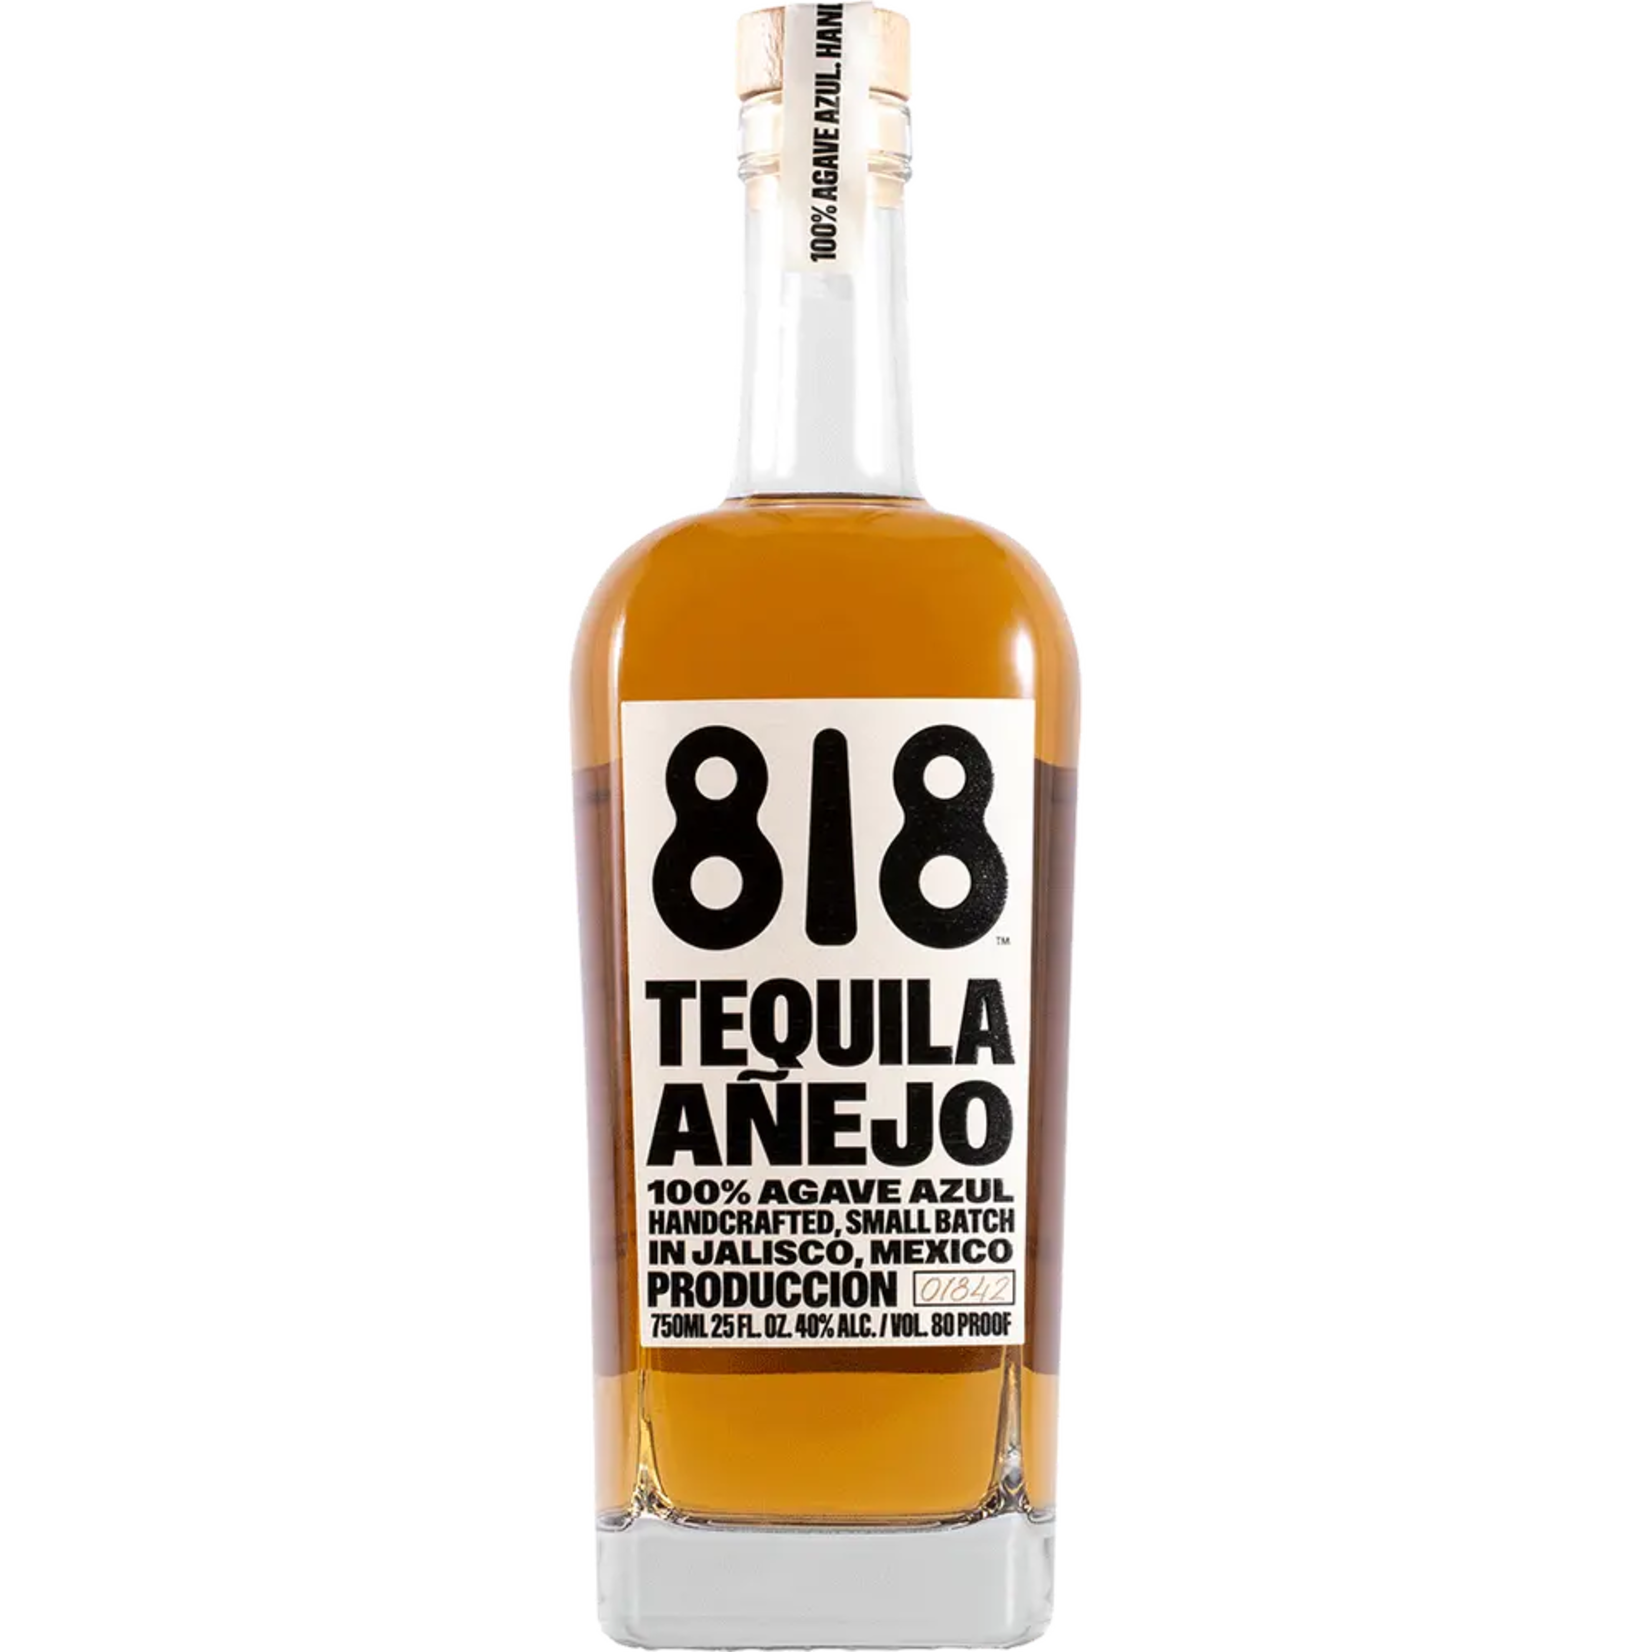 818 Tequila 818 ANEJO TEQUILA 80PF 750 ML